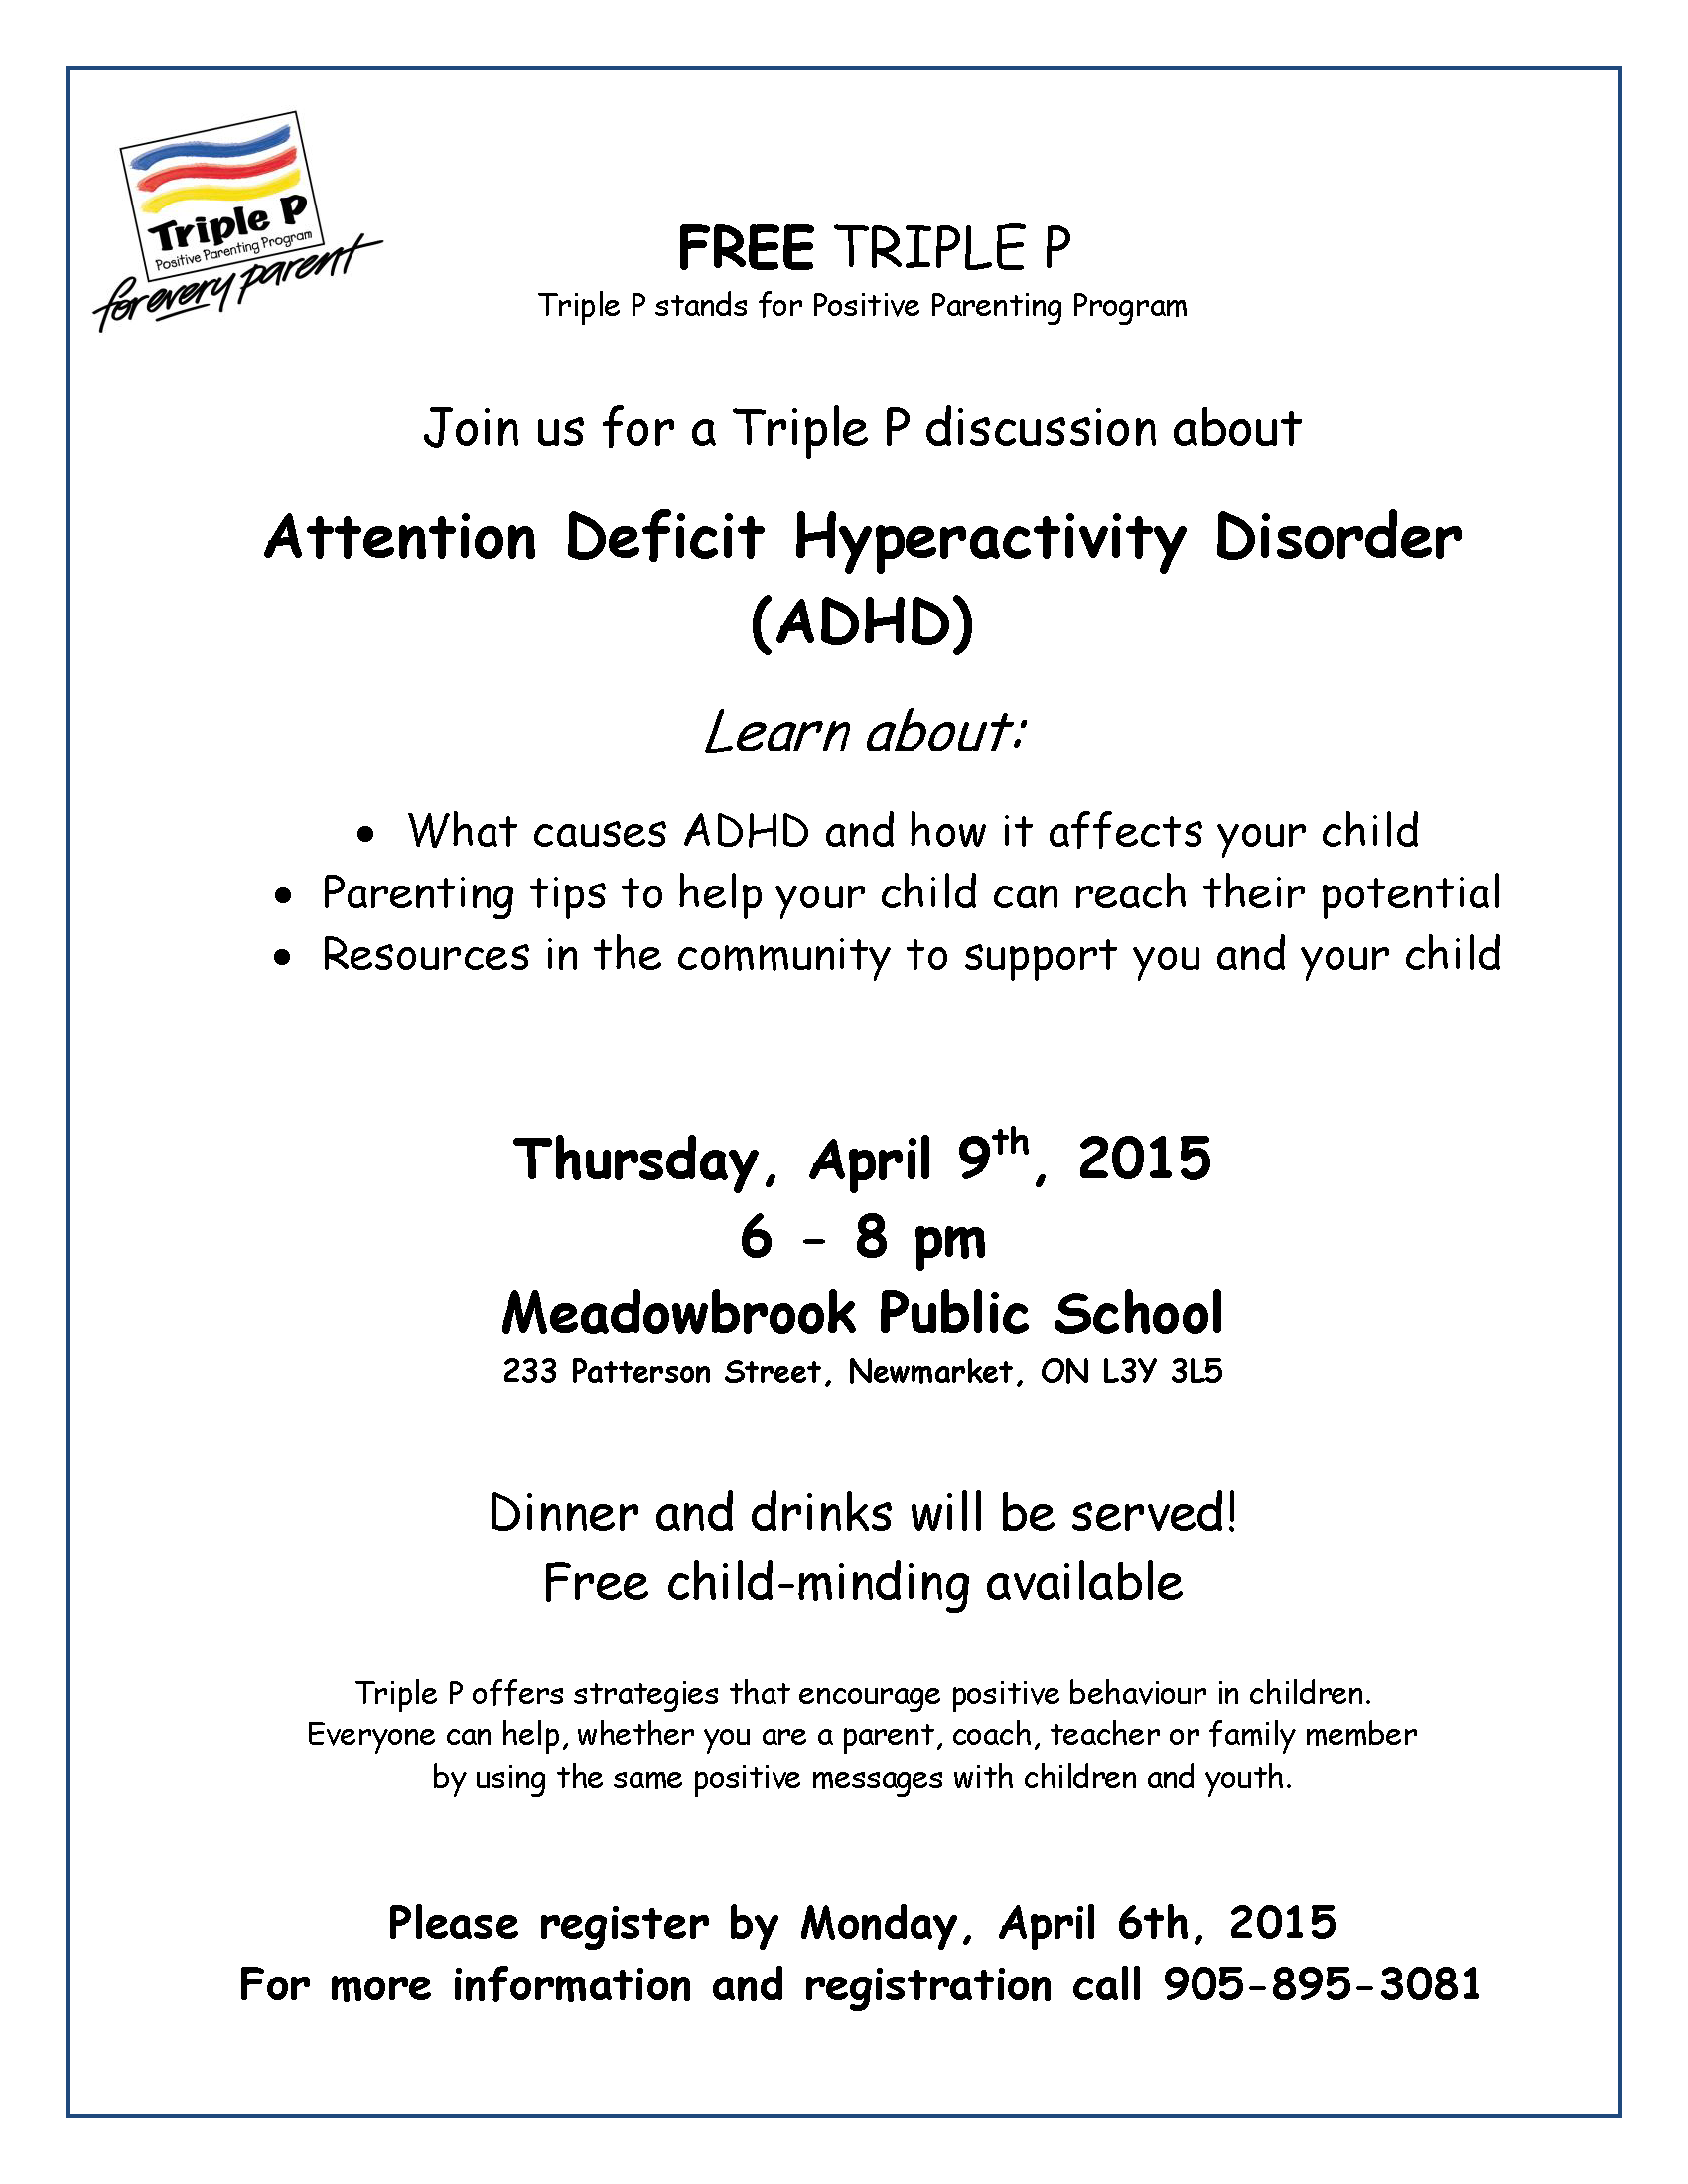 Triple P ADHD Meadowbrook Apr 9 2015 (2).png